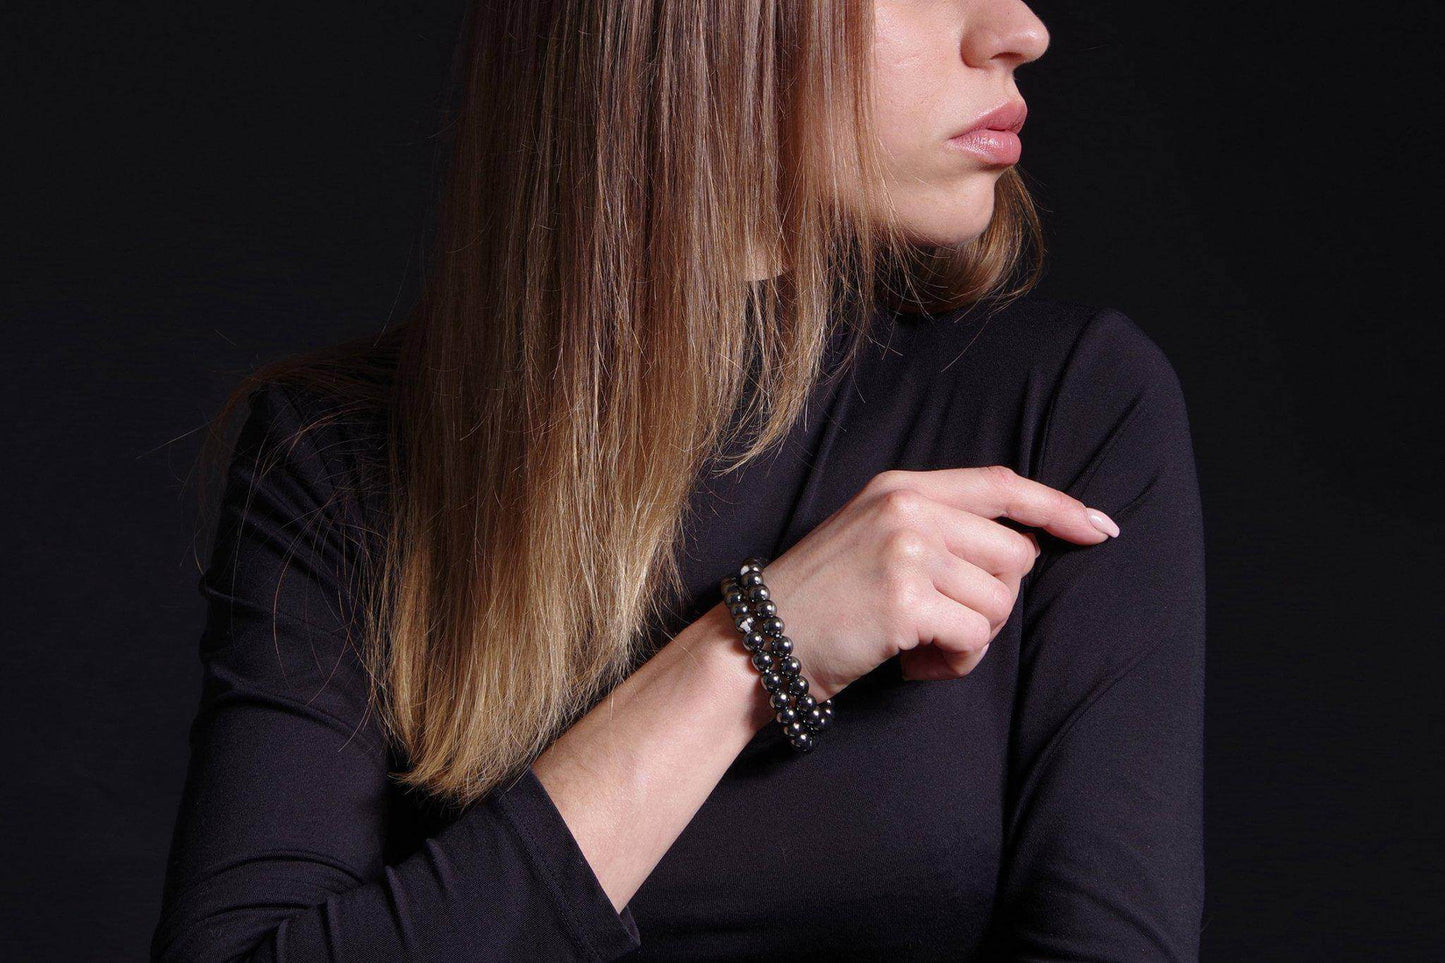 Hematite bracelet – 8mm